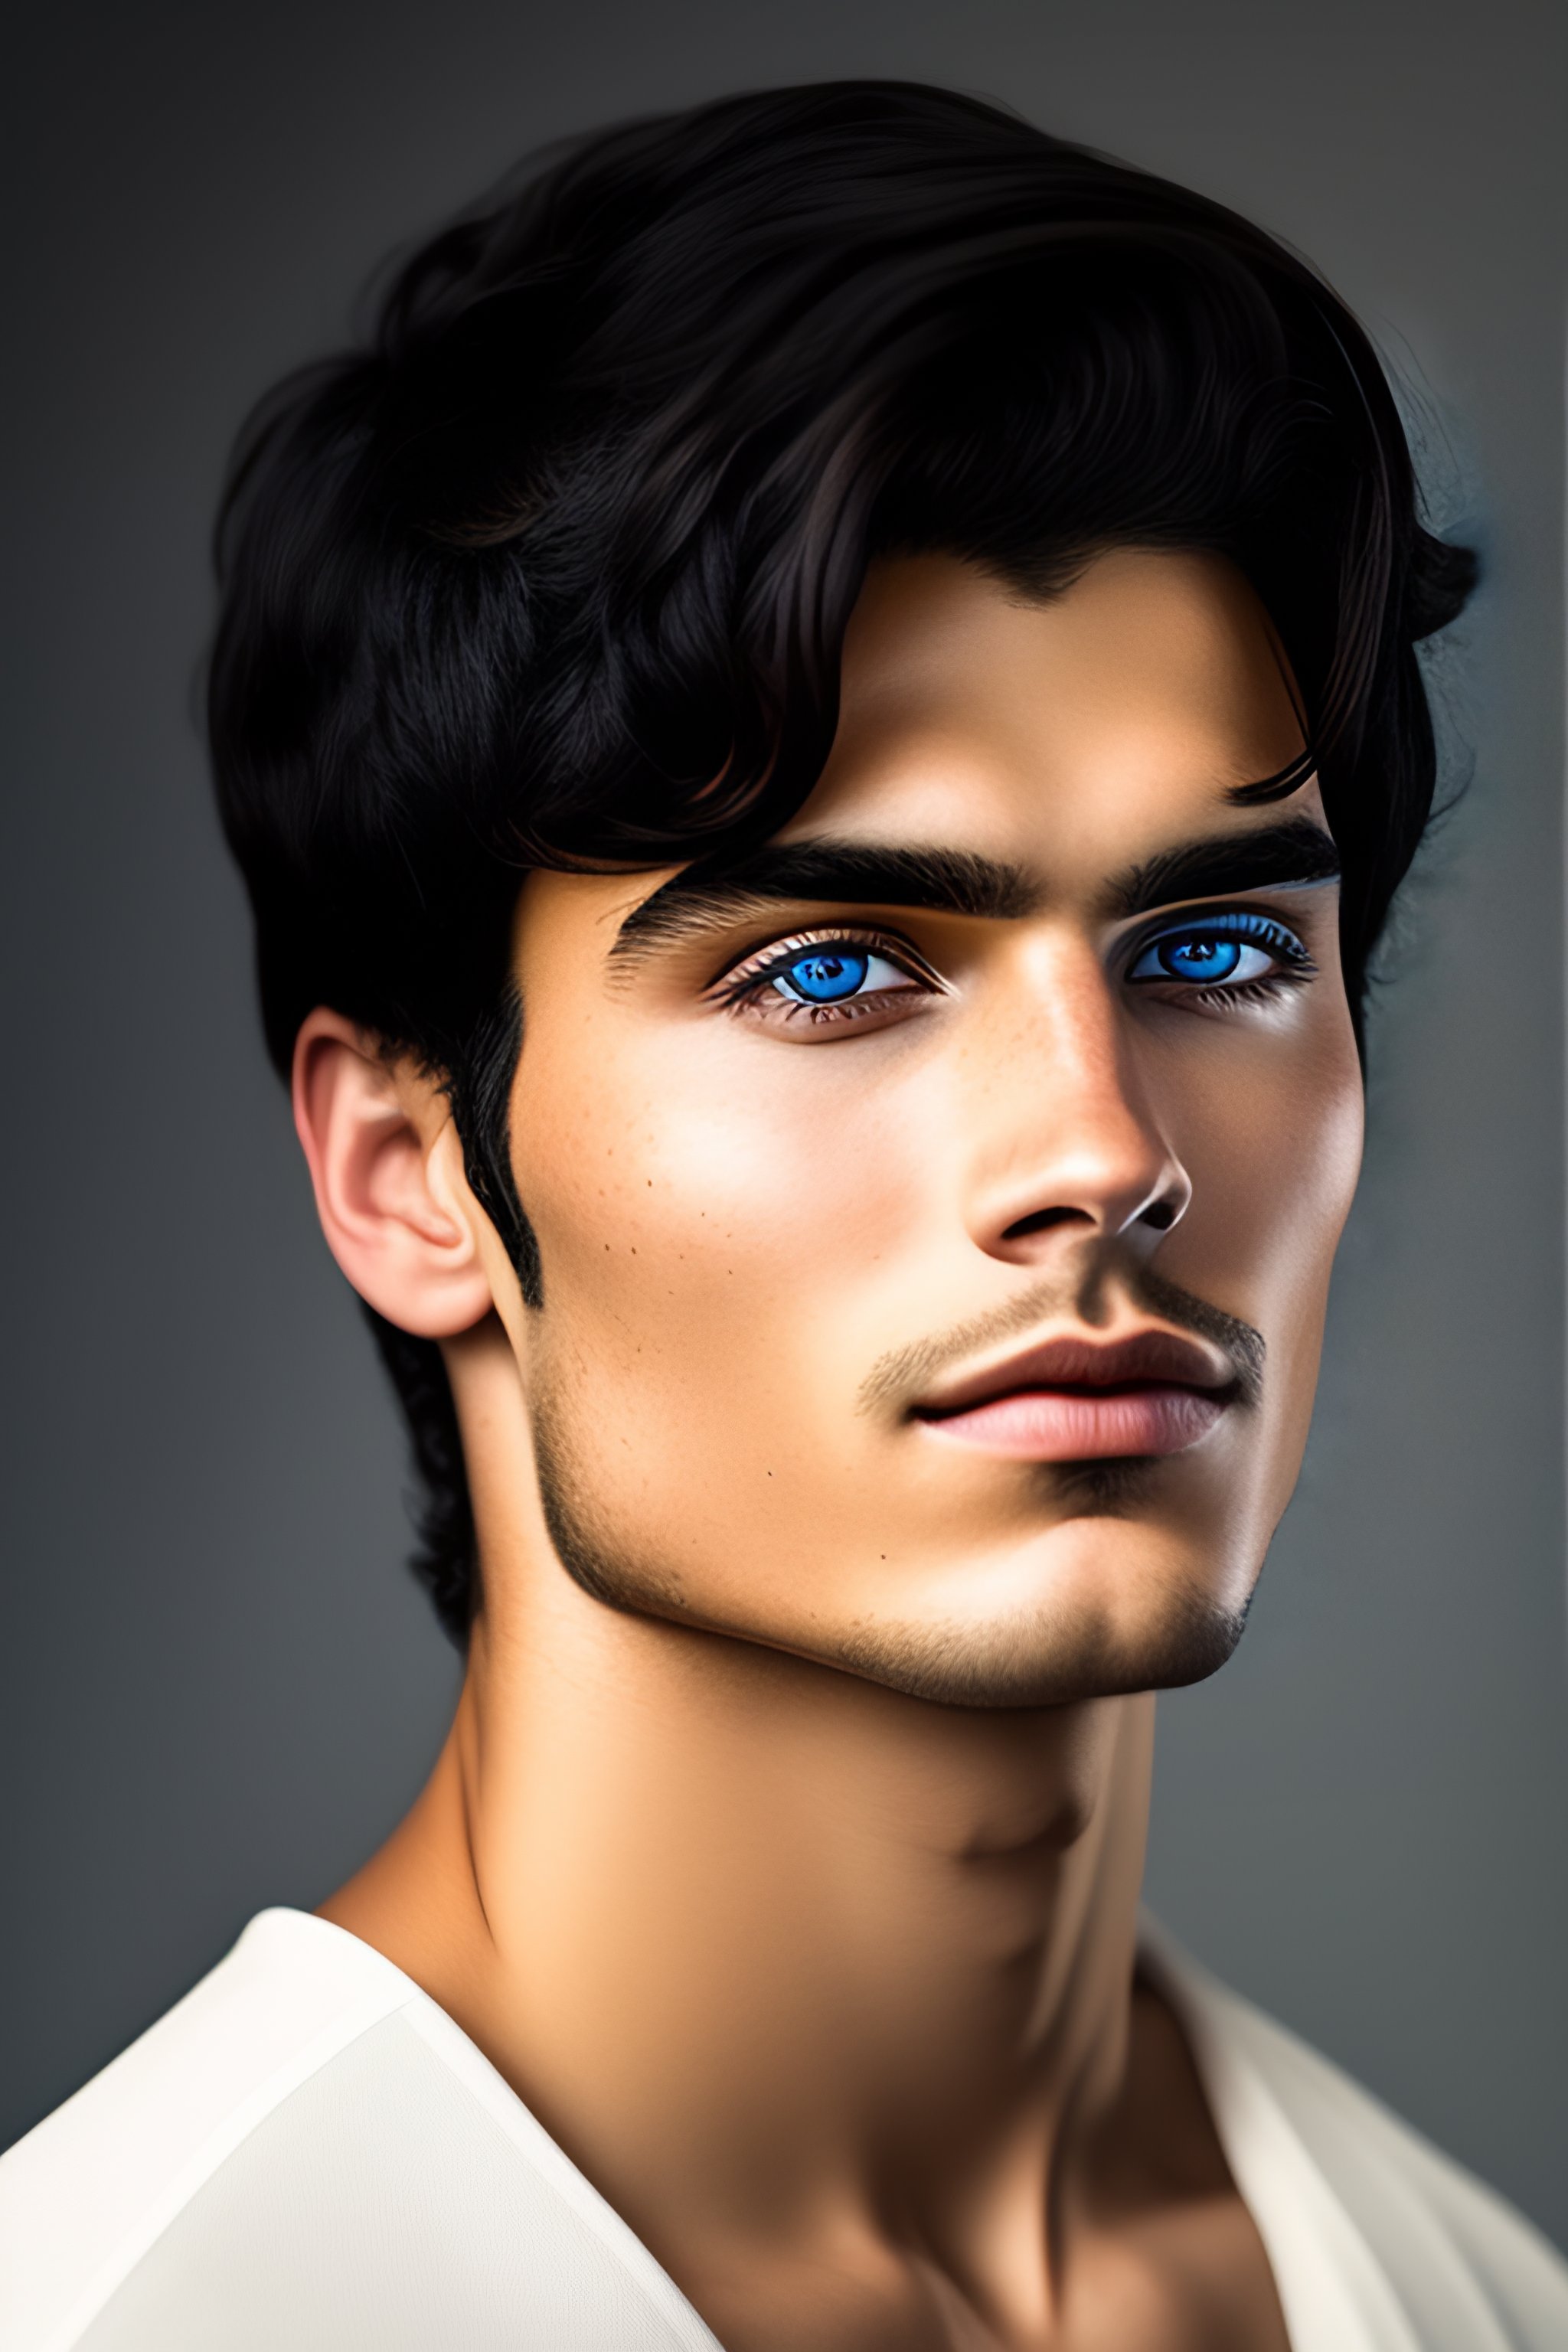 blue eye man